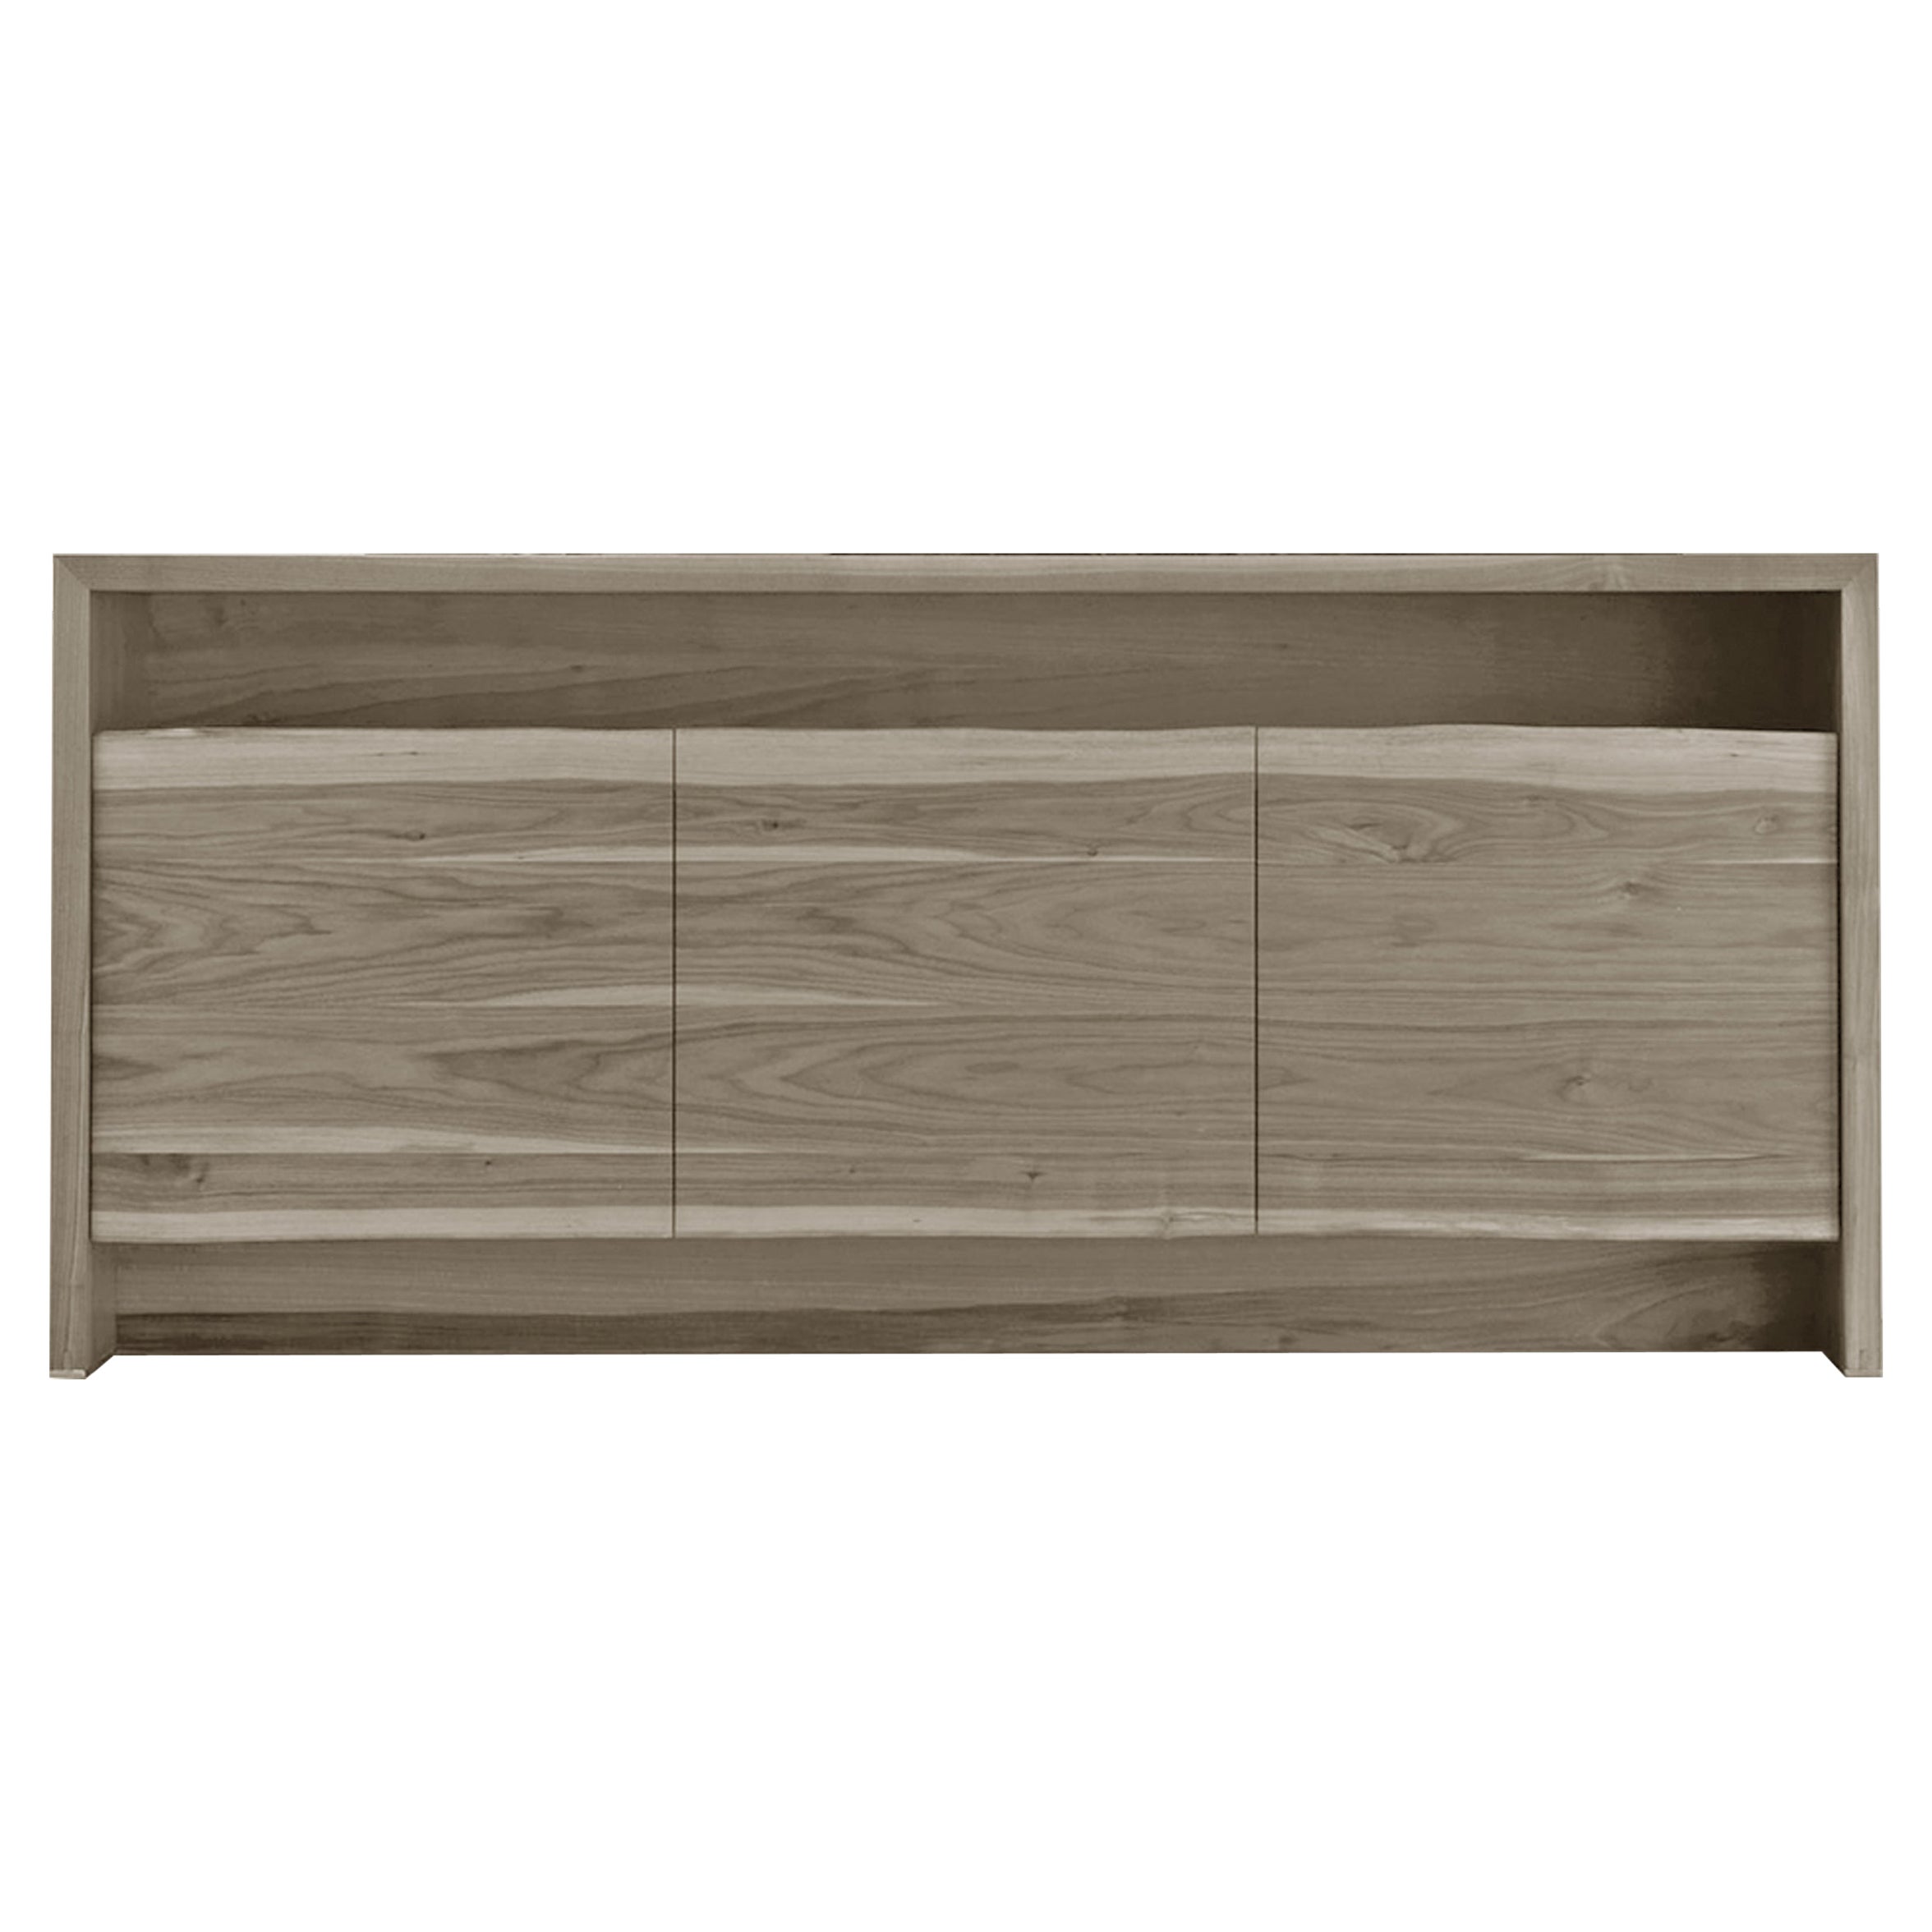 Puraforma Solid Wood Sideborad, Walnut Natural Grey Finish, Contemporary